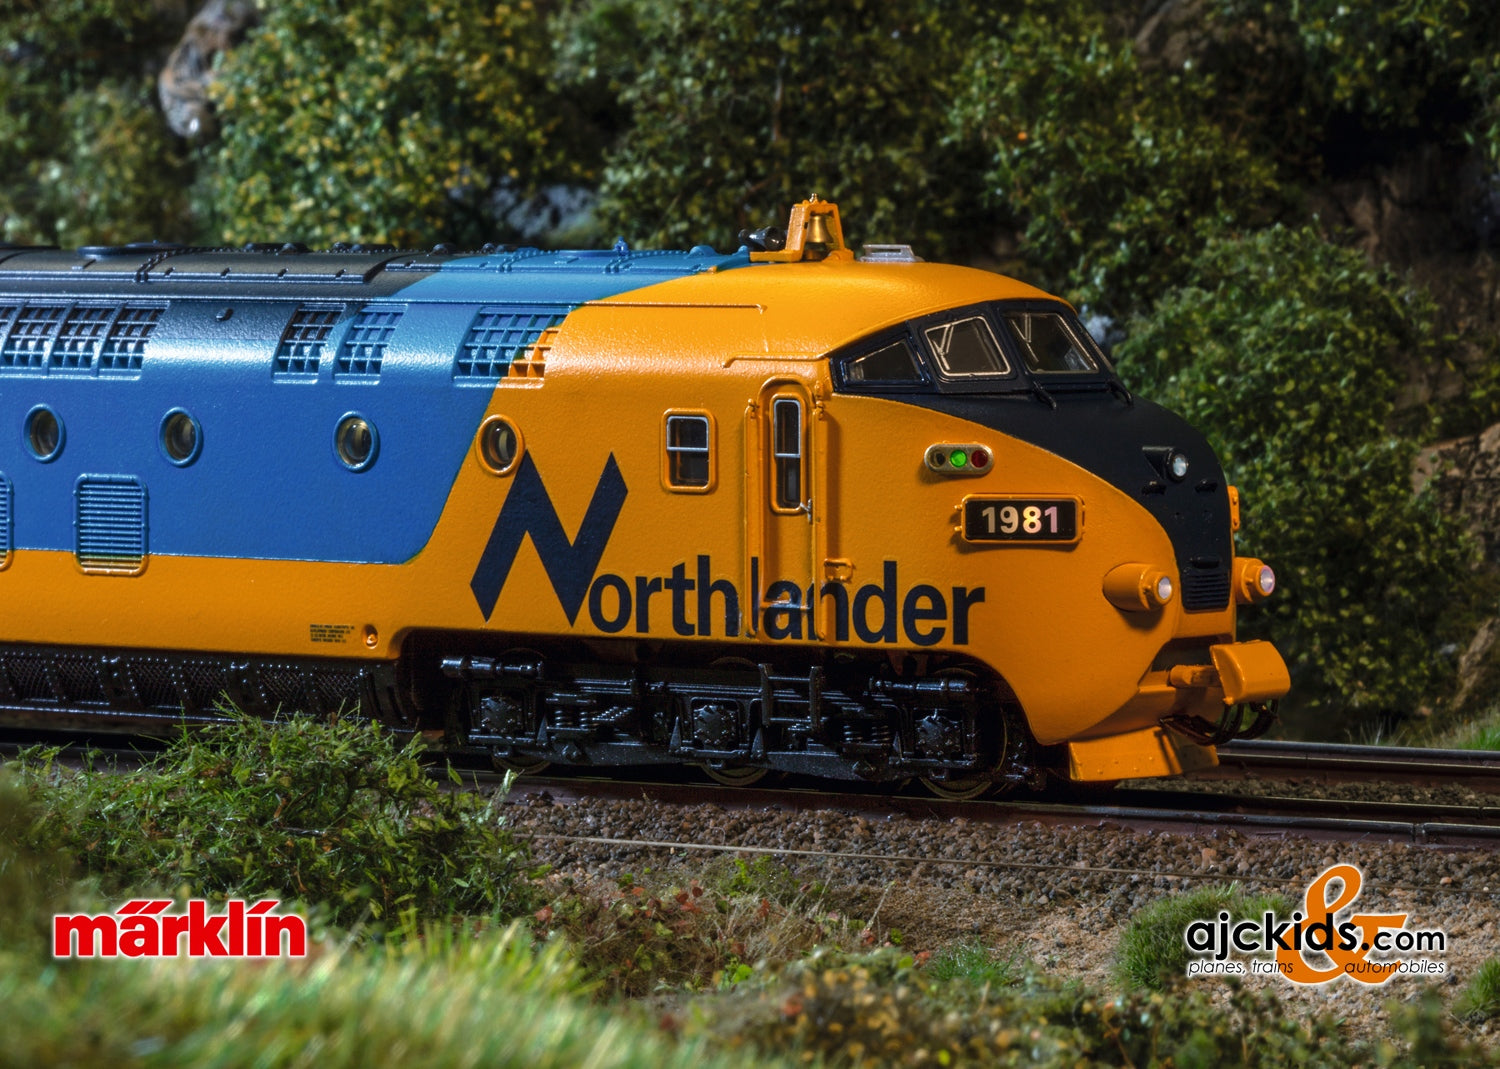 Marklin 39705 - Class RAm TEE "NORTHLANDER" Diesel Powered Railcar Train At Ajckids.com